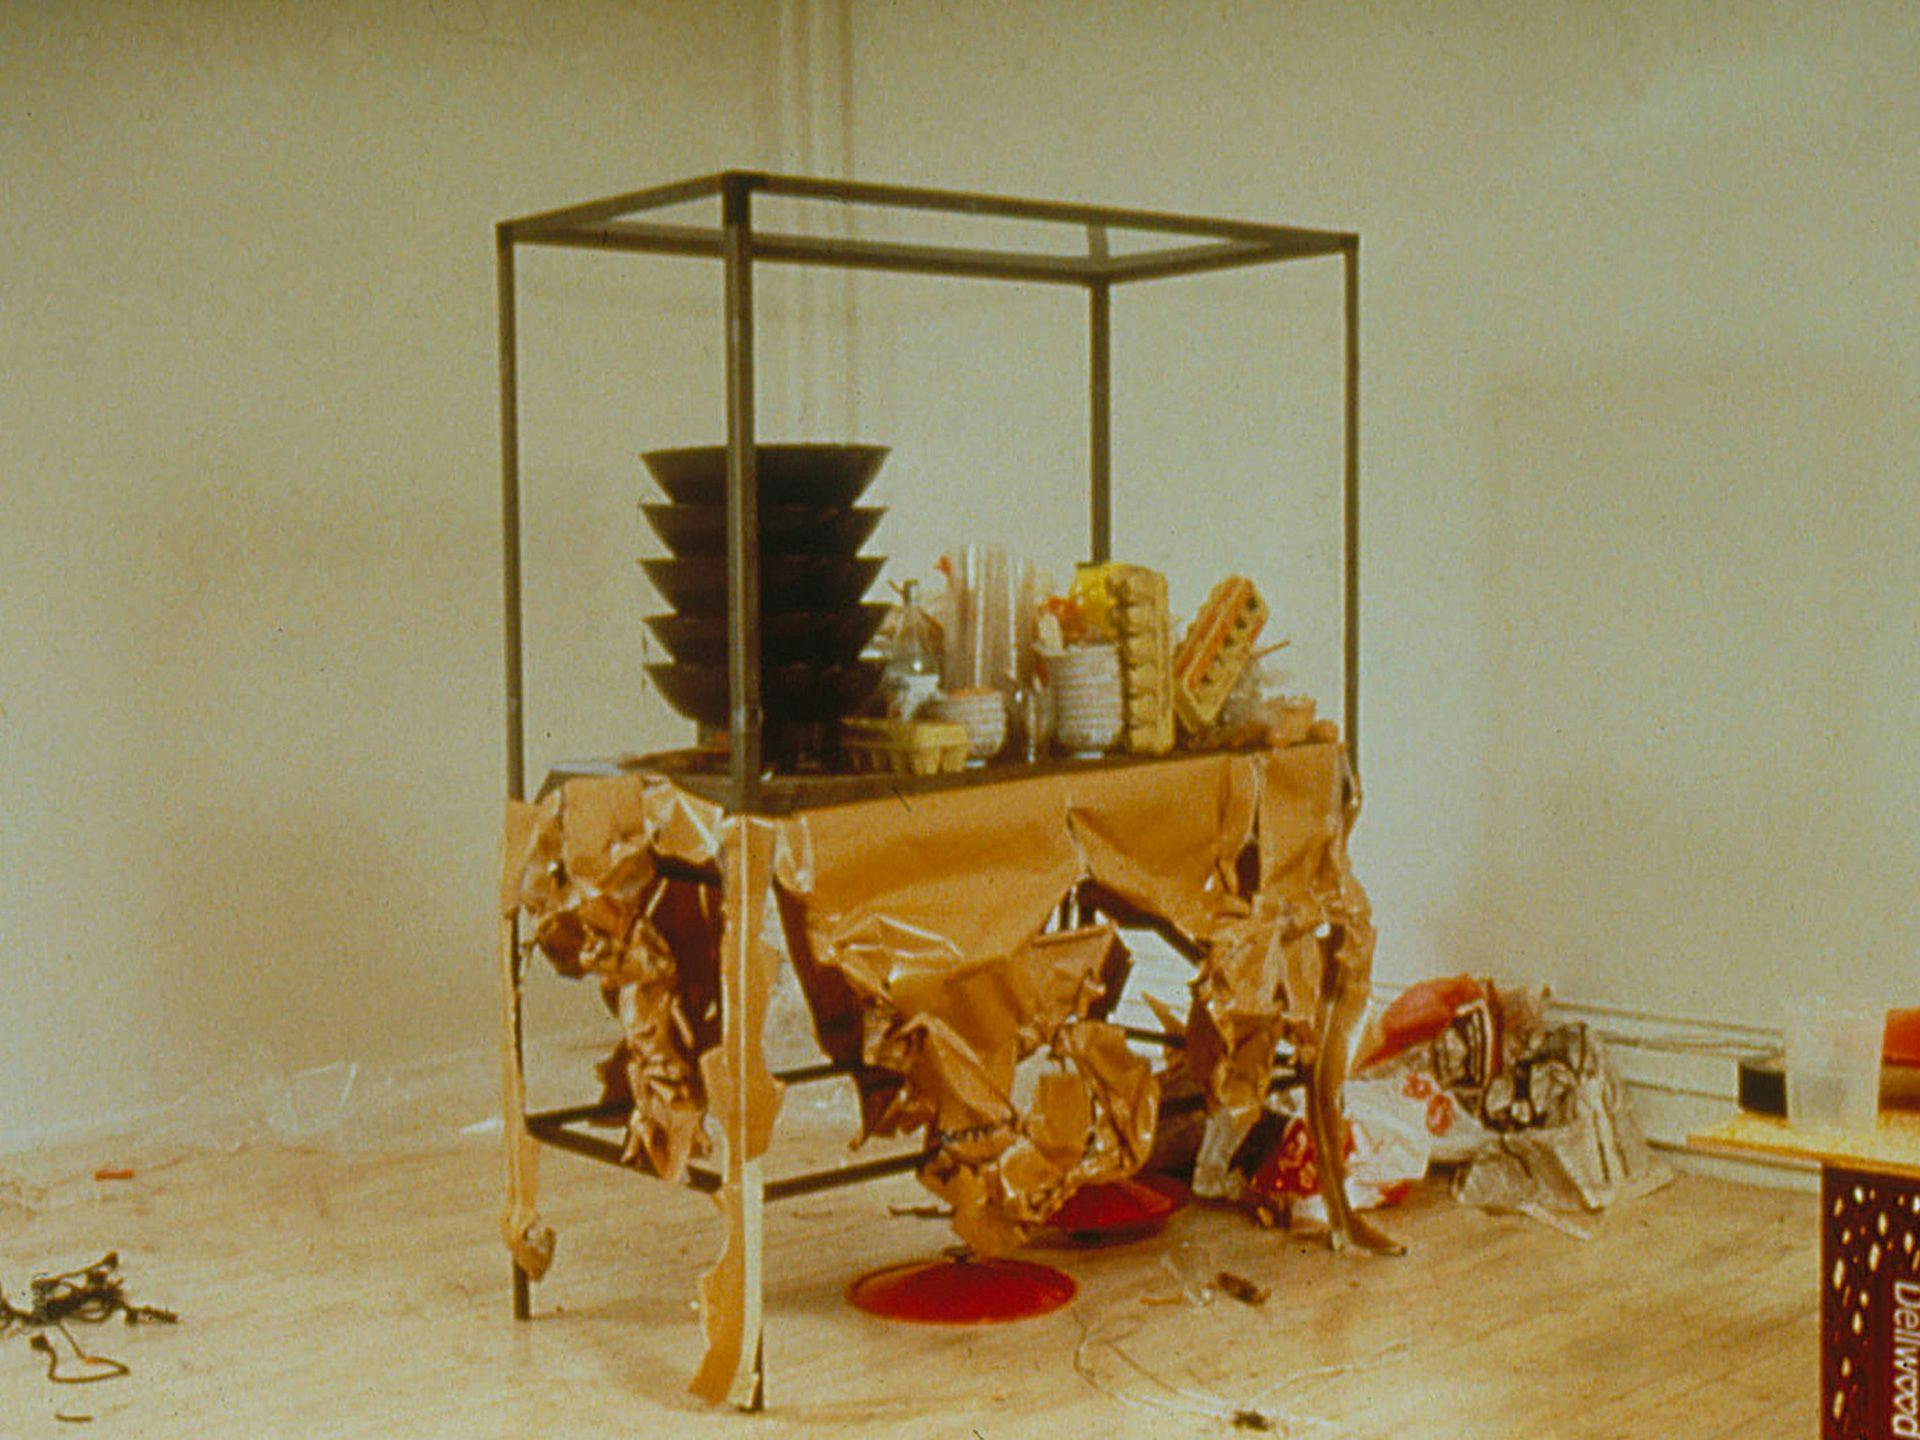 A mixed media installation by Rirkrit Tiravinija, titled untitled (pad thai), dated 1990.